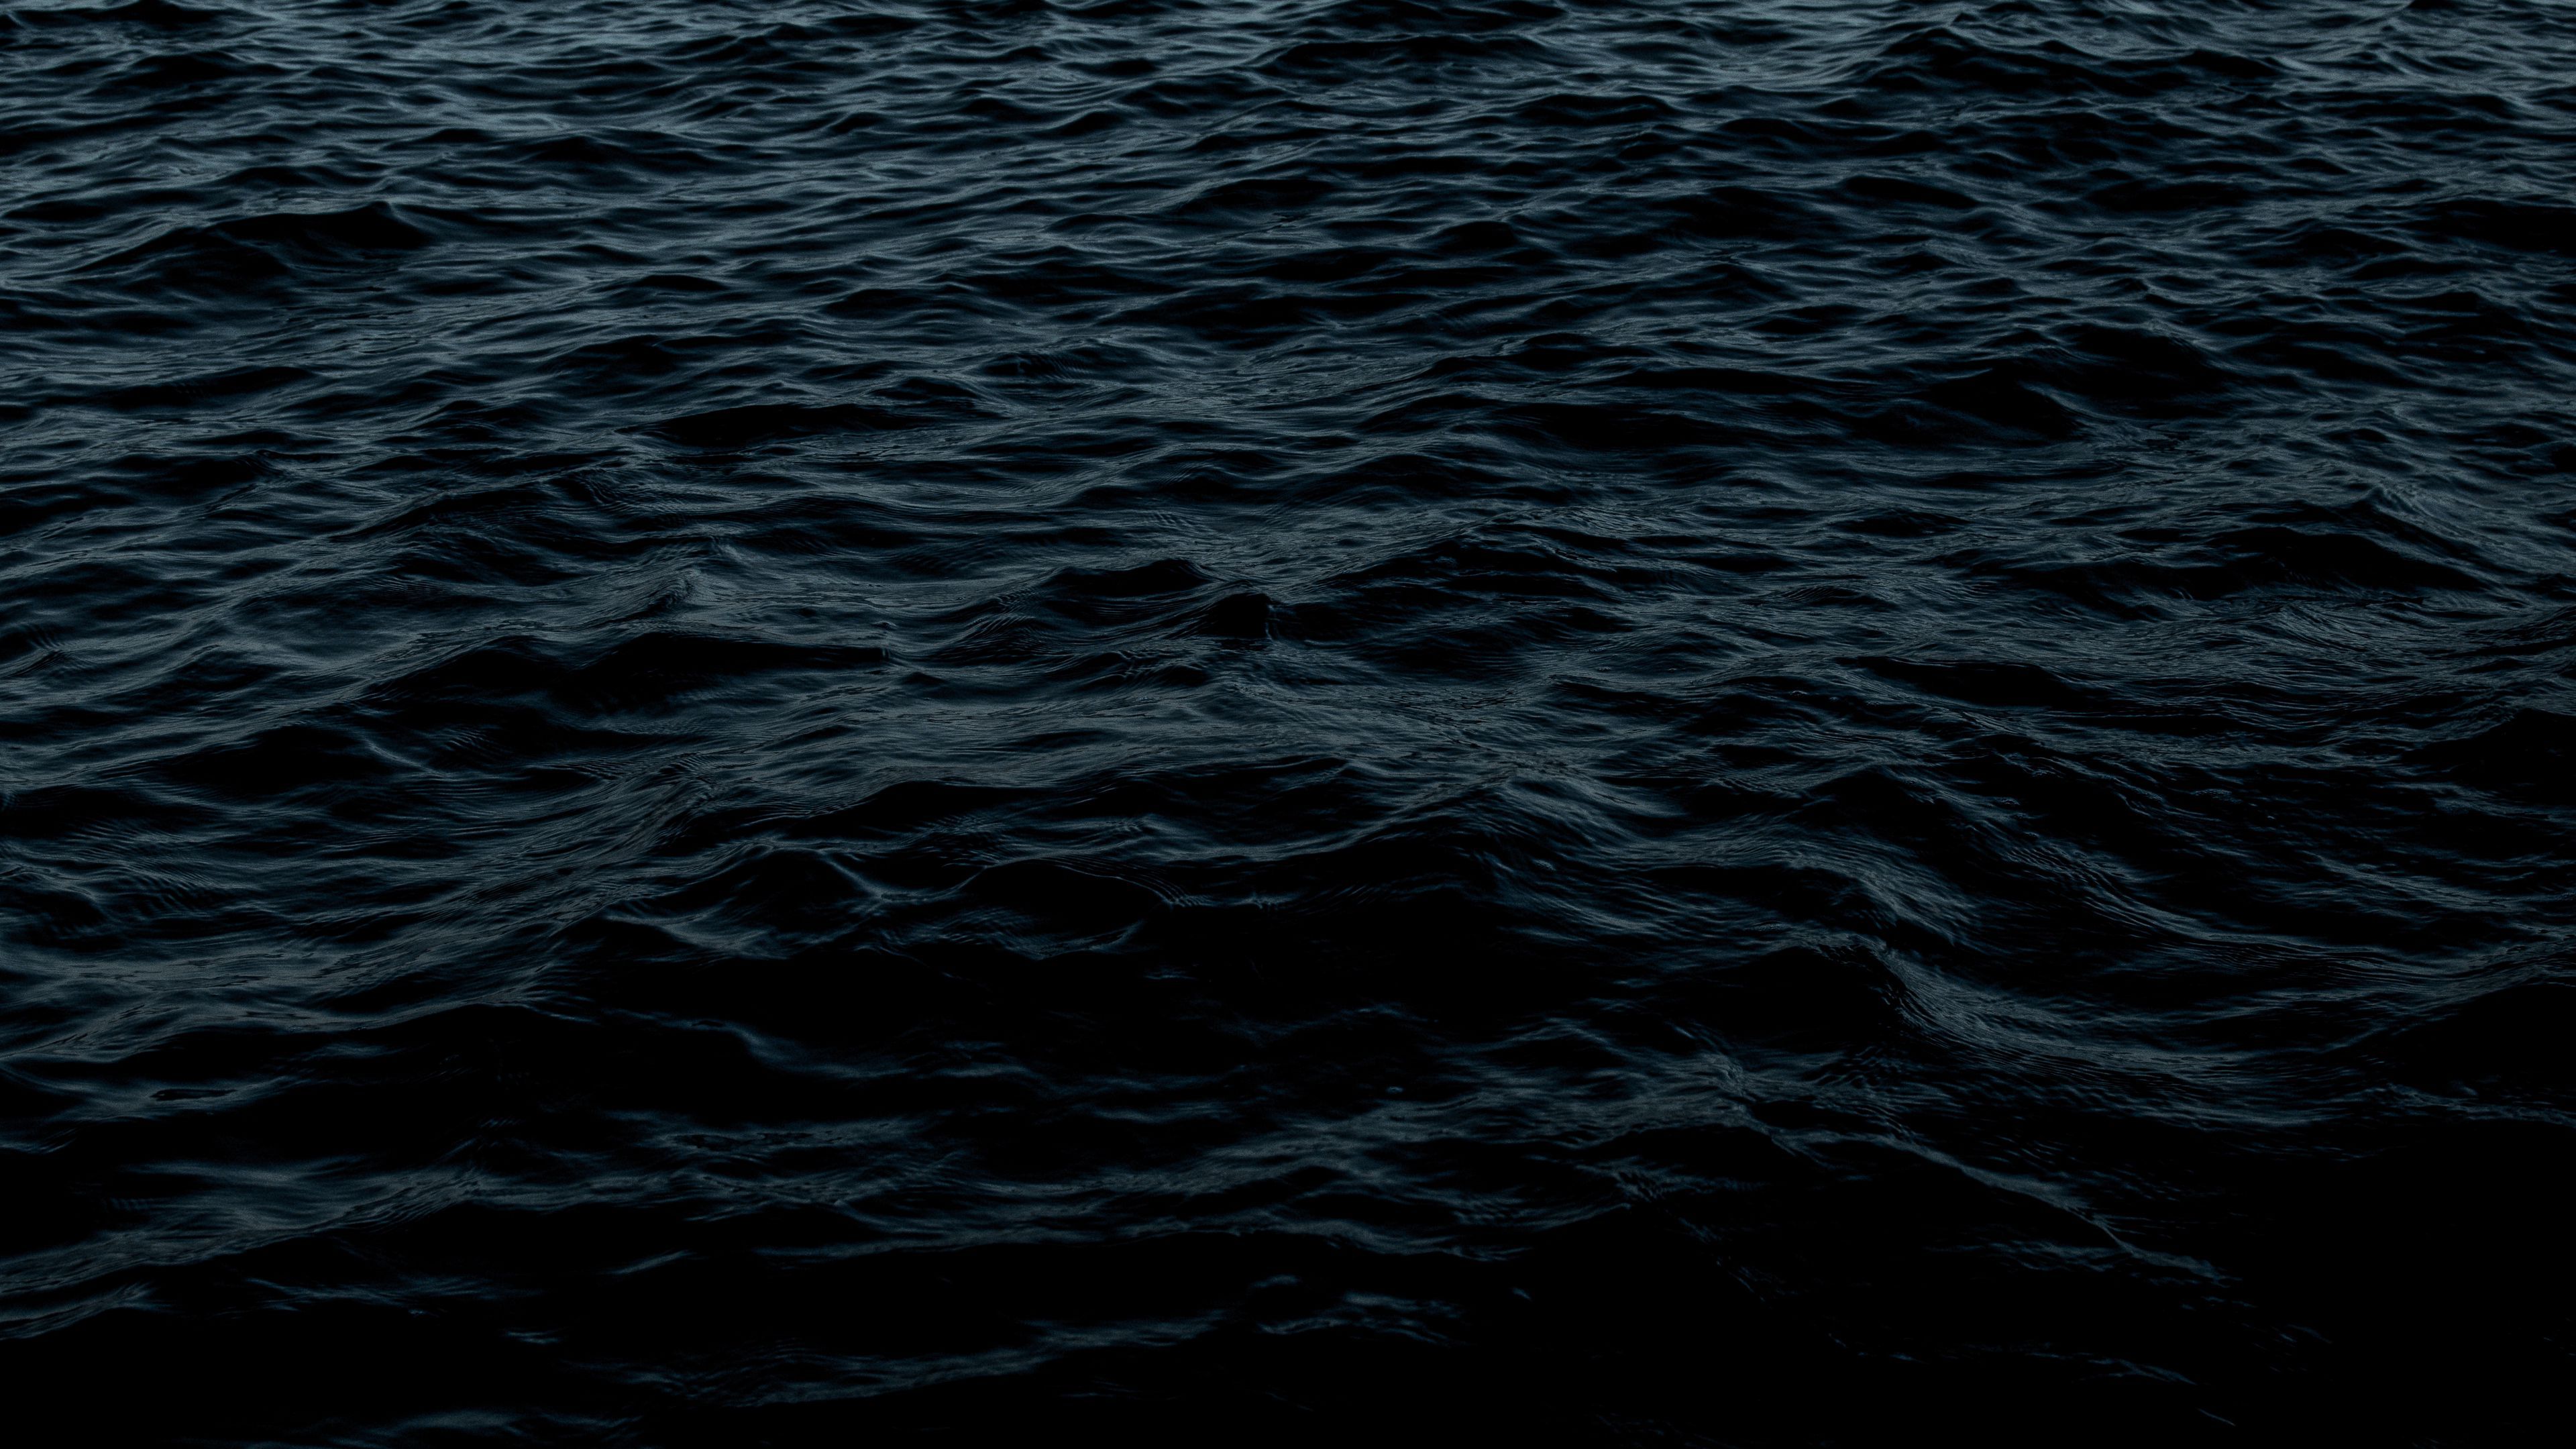 Download wallpaper 3840x2160 waves, dark, water, ripples 4k uhd 16:9 HD background